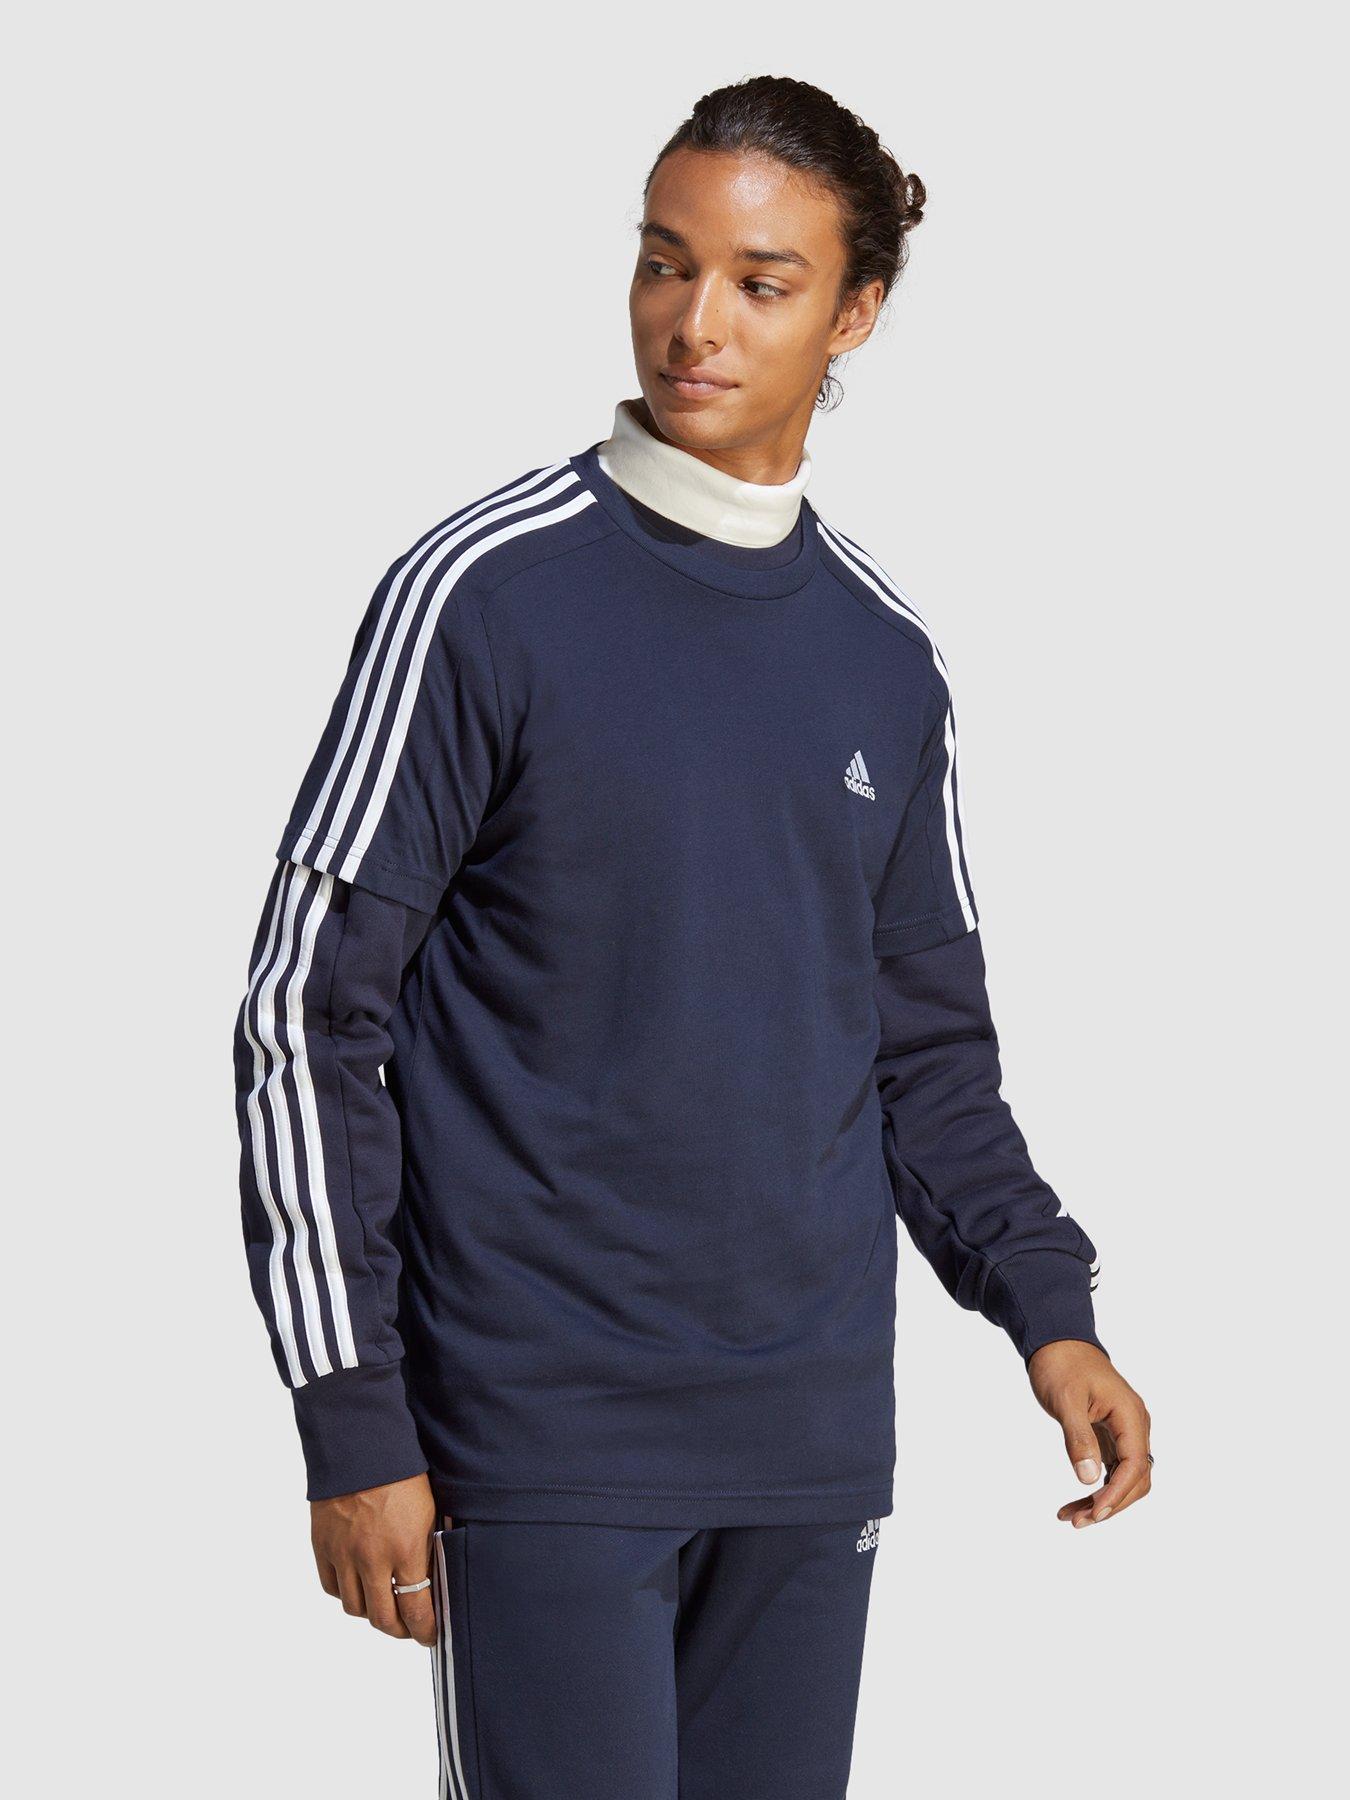 Adidas Men's Original Short Slv 3 Stripe Essential California T-Shirt Gray  XL 